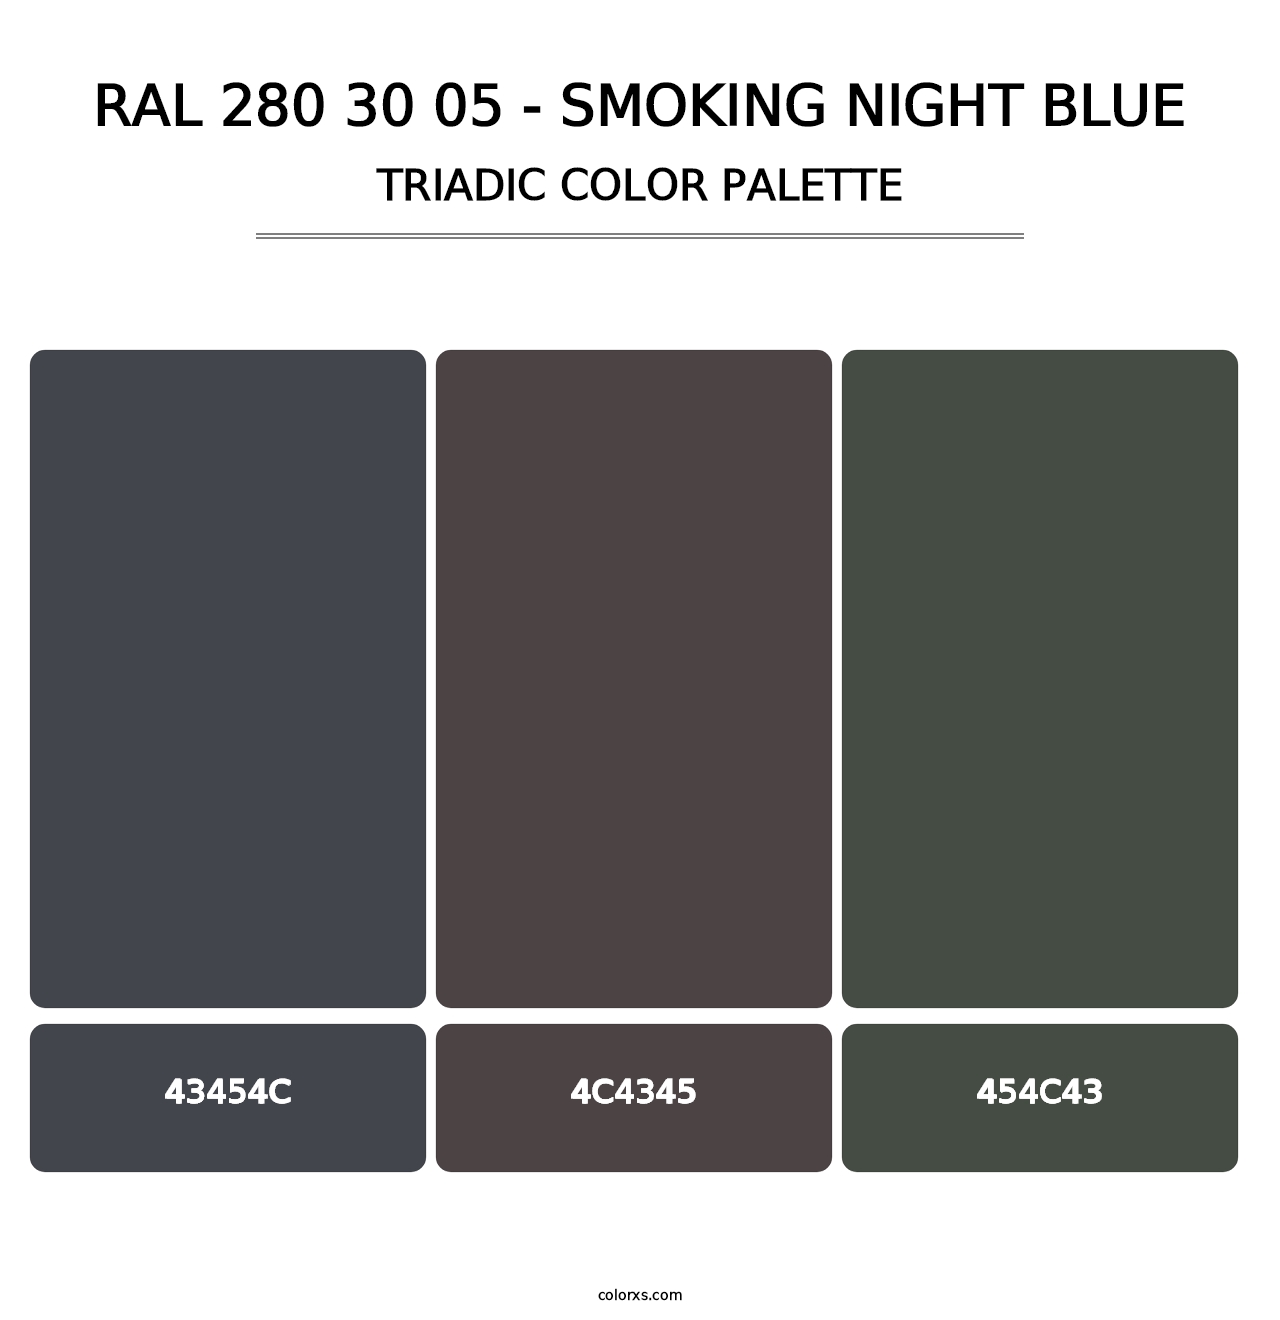 RAL 280 30 05 - Smoking Night Blue - Triadic Color Palette